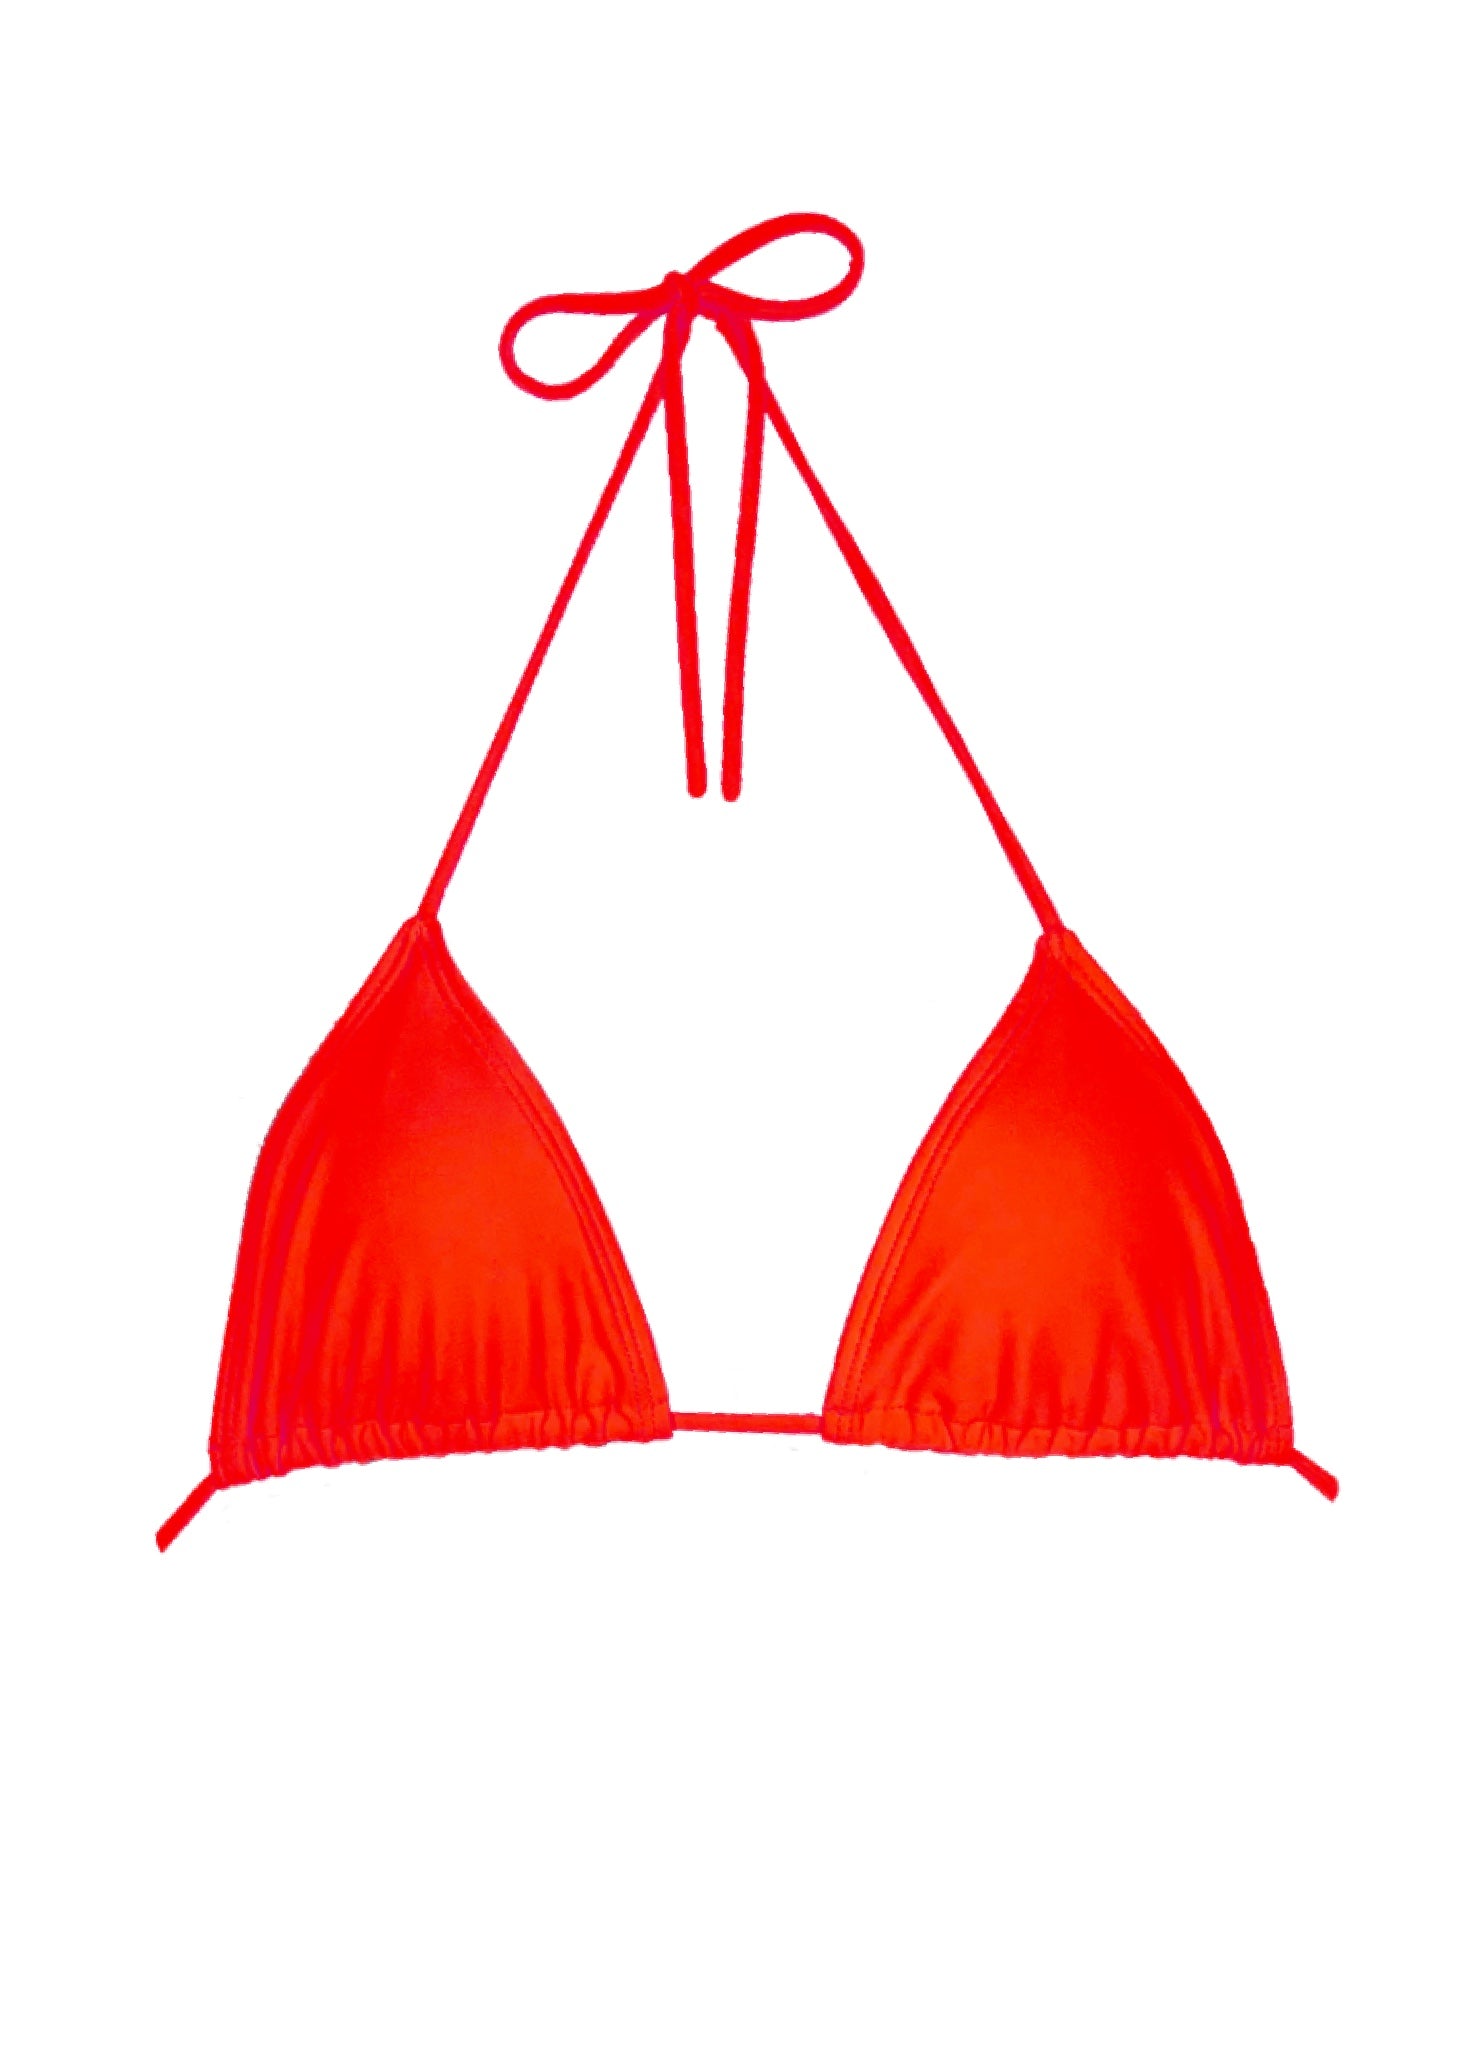 Women's String Bikini Top and Short Lace Sleep Set - Red